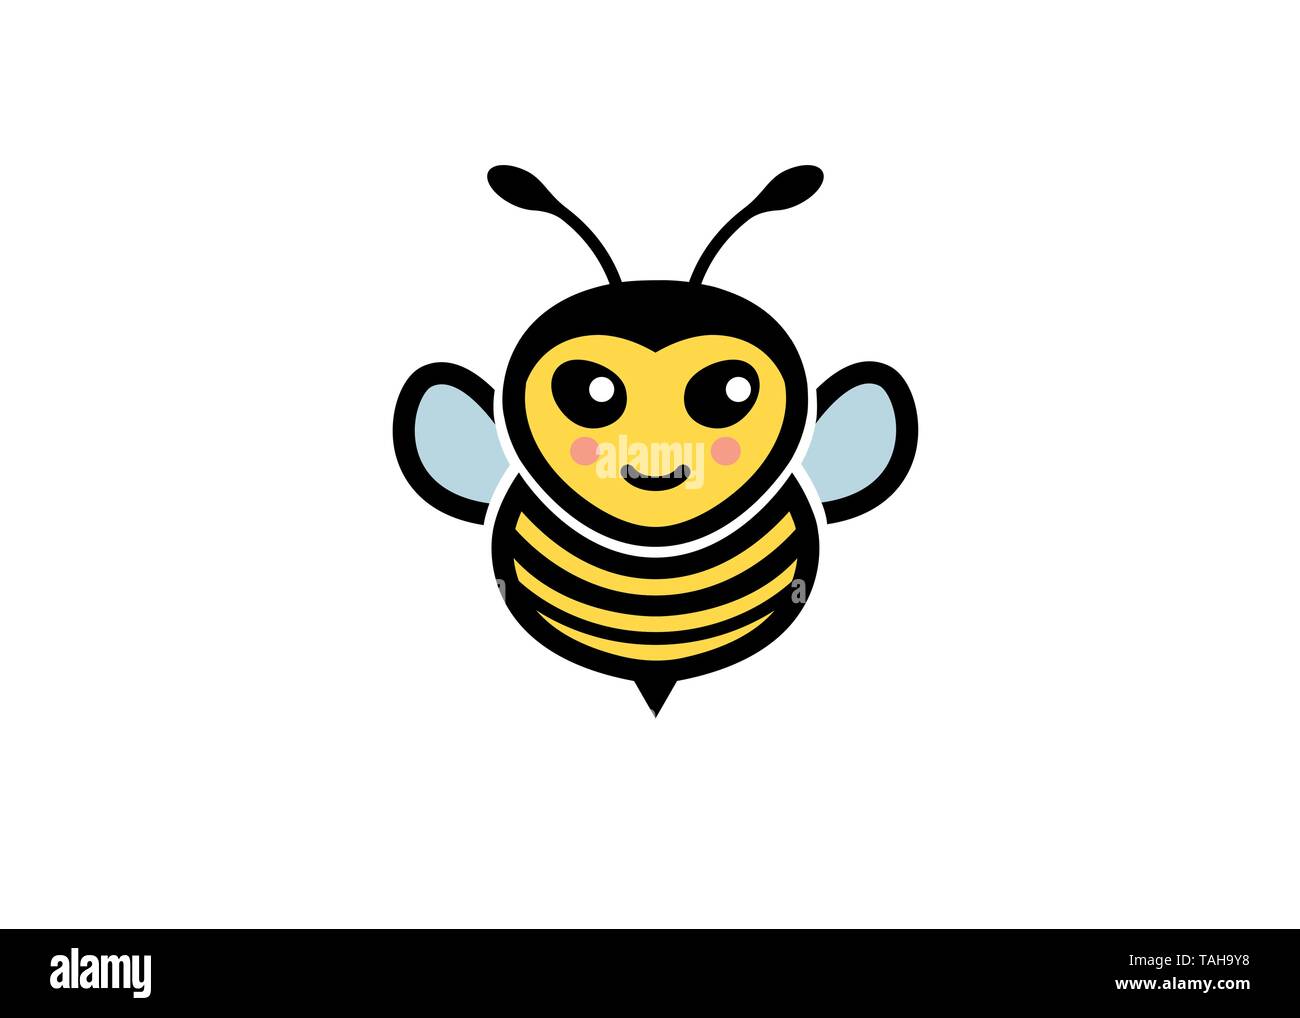 https://c8.alamy.com/comp/TAH9Y8/creative-bumble-bee-logo-TAH9Y8.jpg